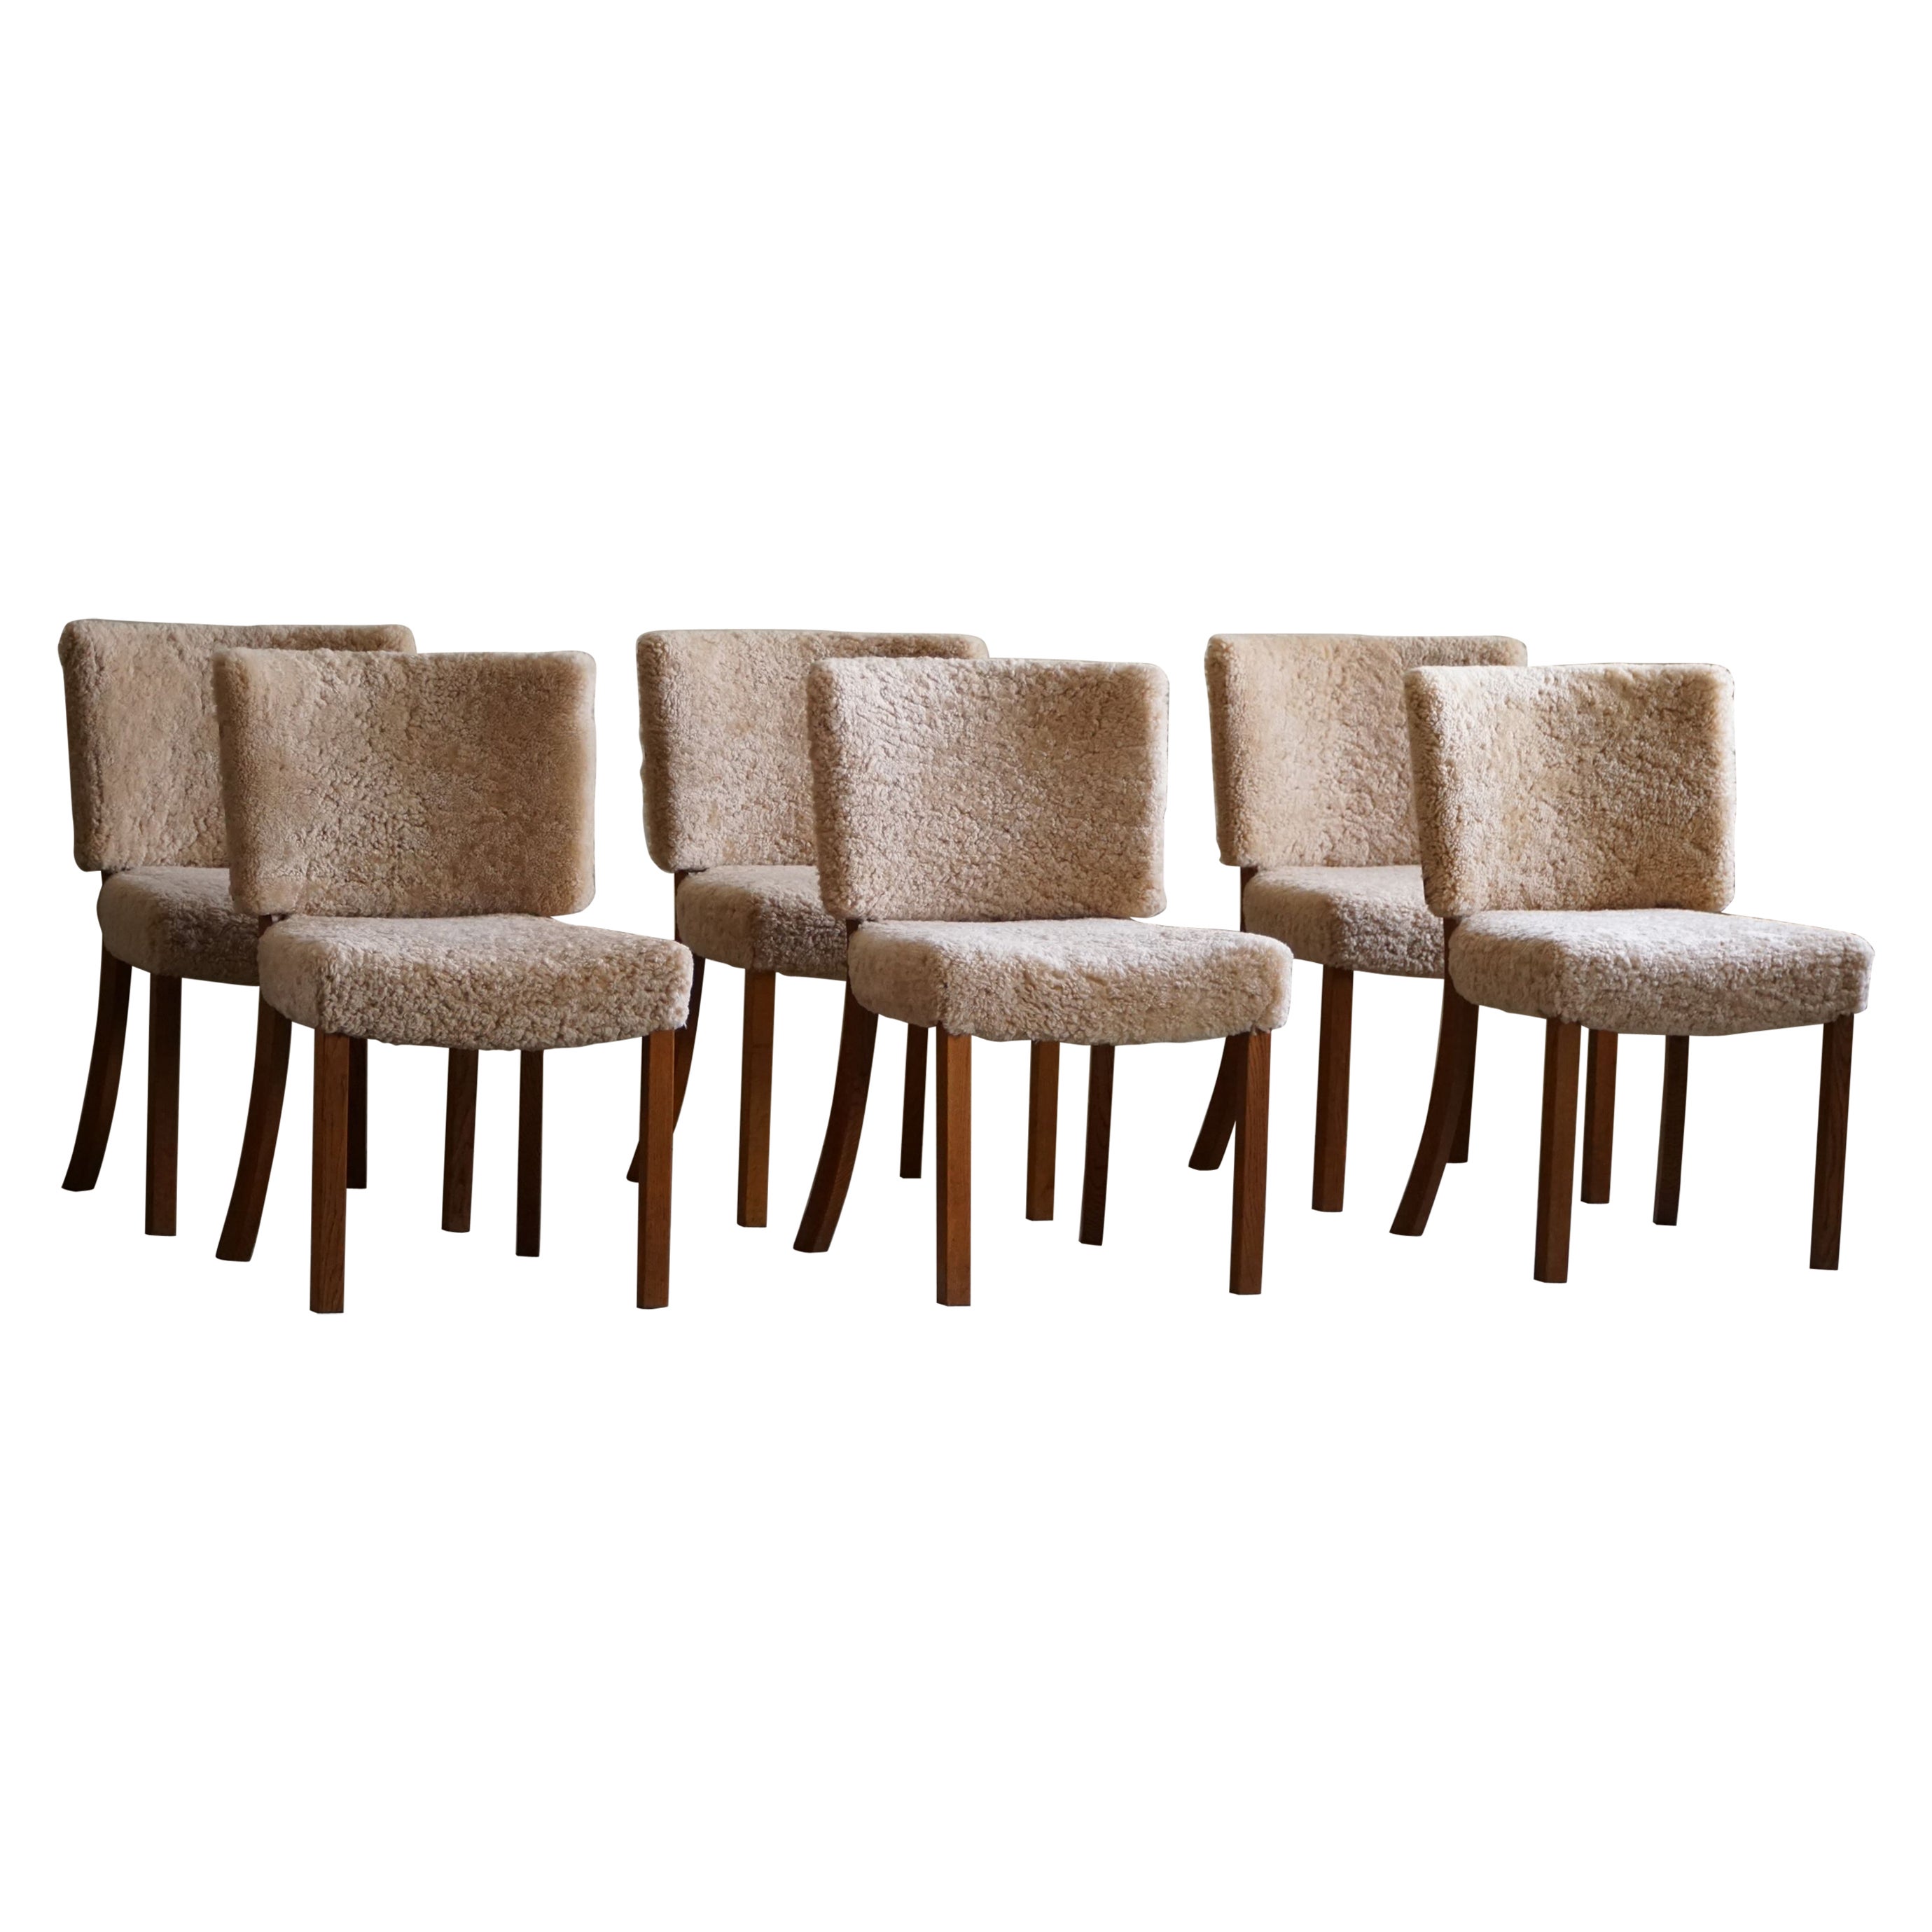 A set of 6 Dining Chairs in Oak and Lambswool, Danish Modern, Kaj Gottlob, 1950s For Sale